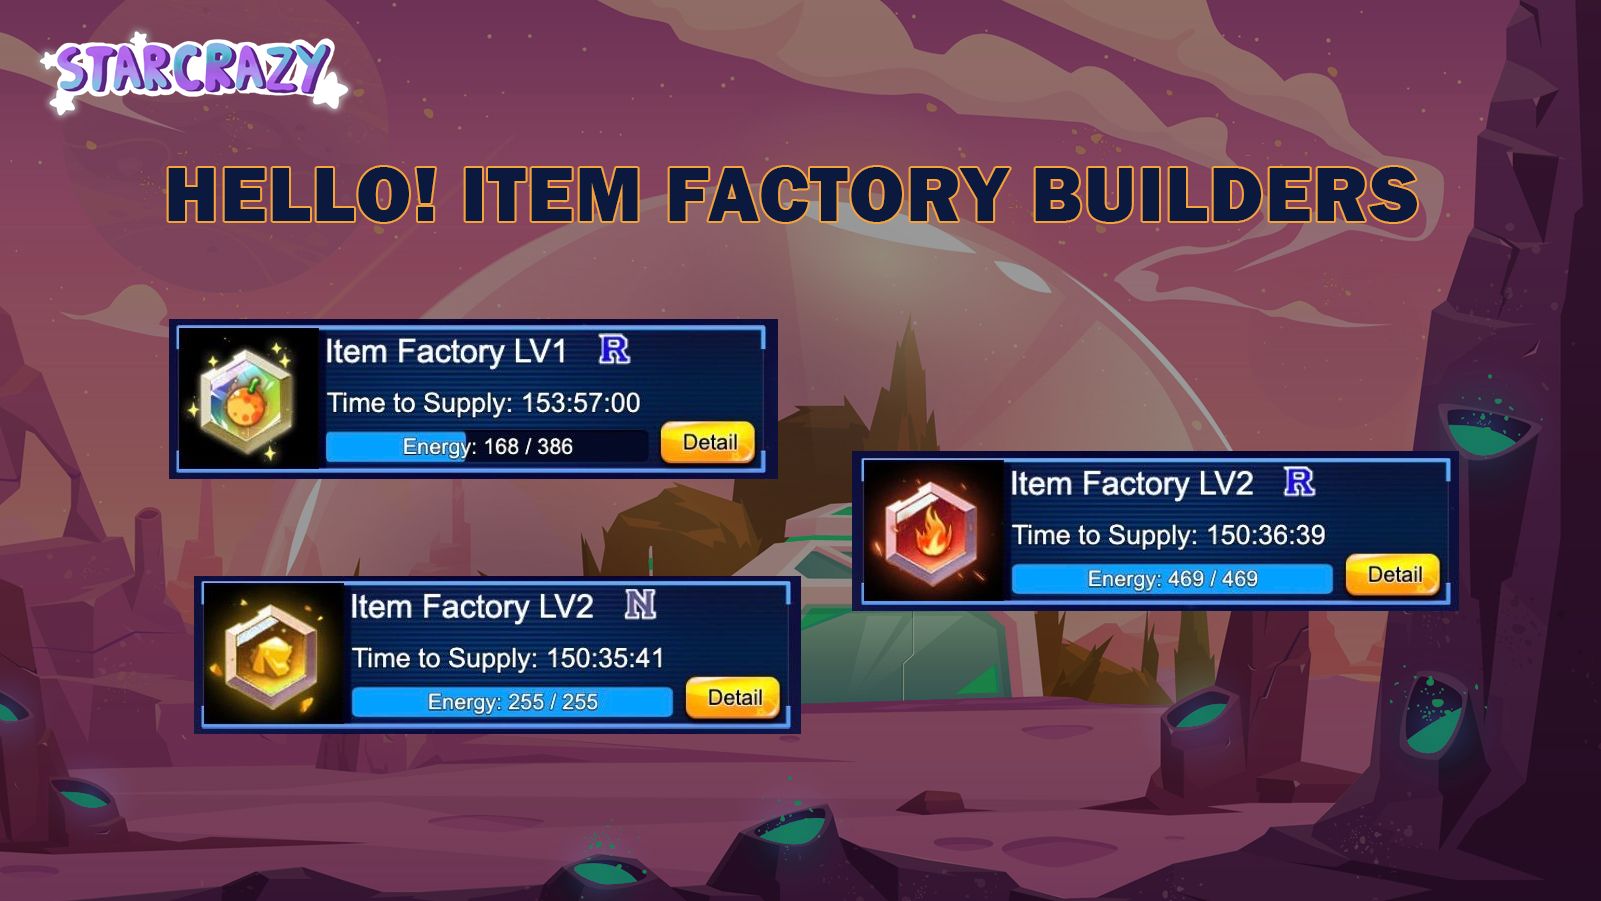 Hello! Item Factory Builders